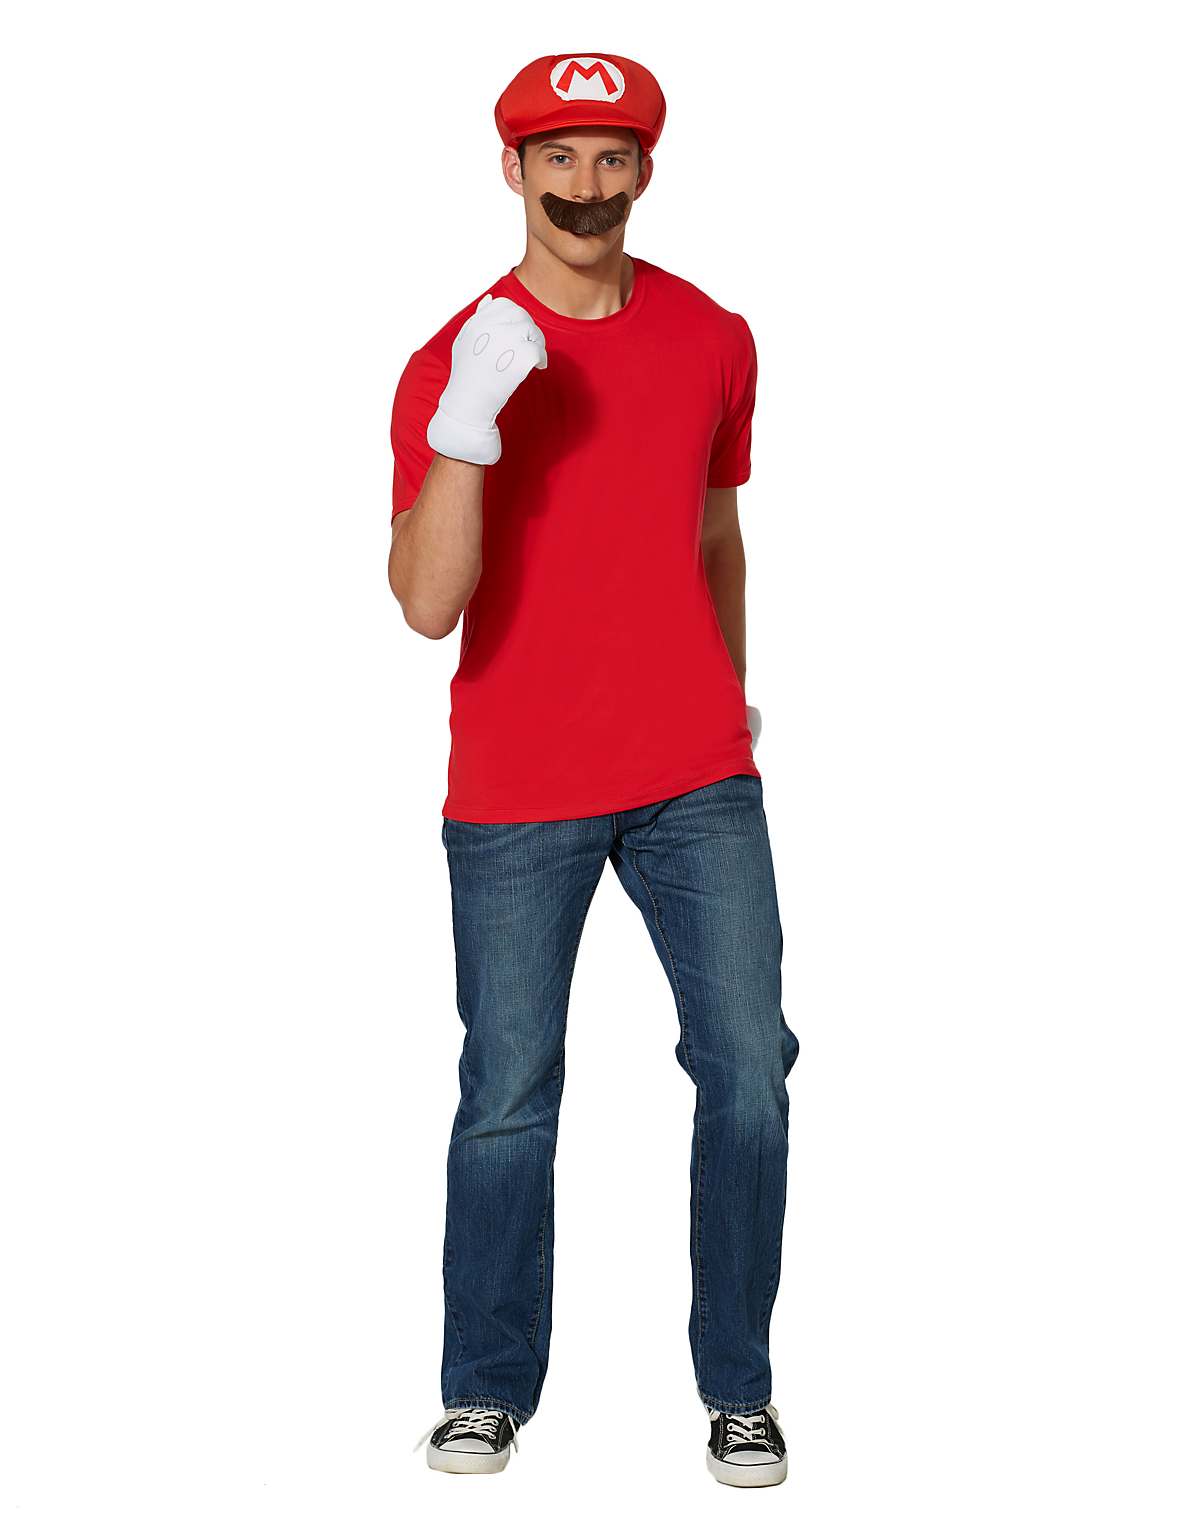 Mario Costume Kit